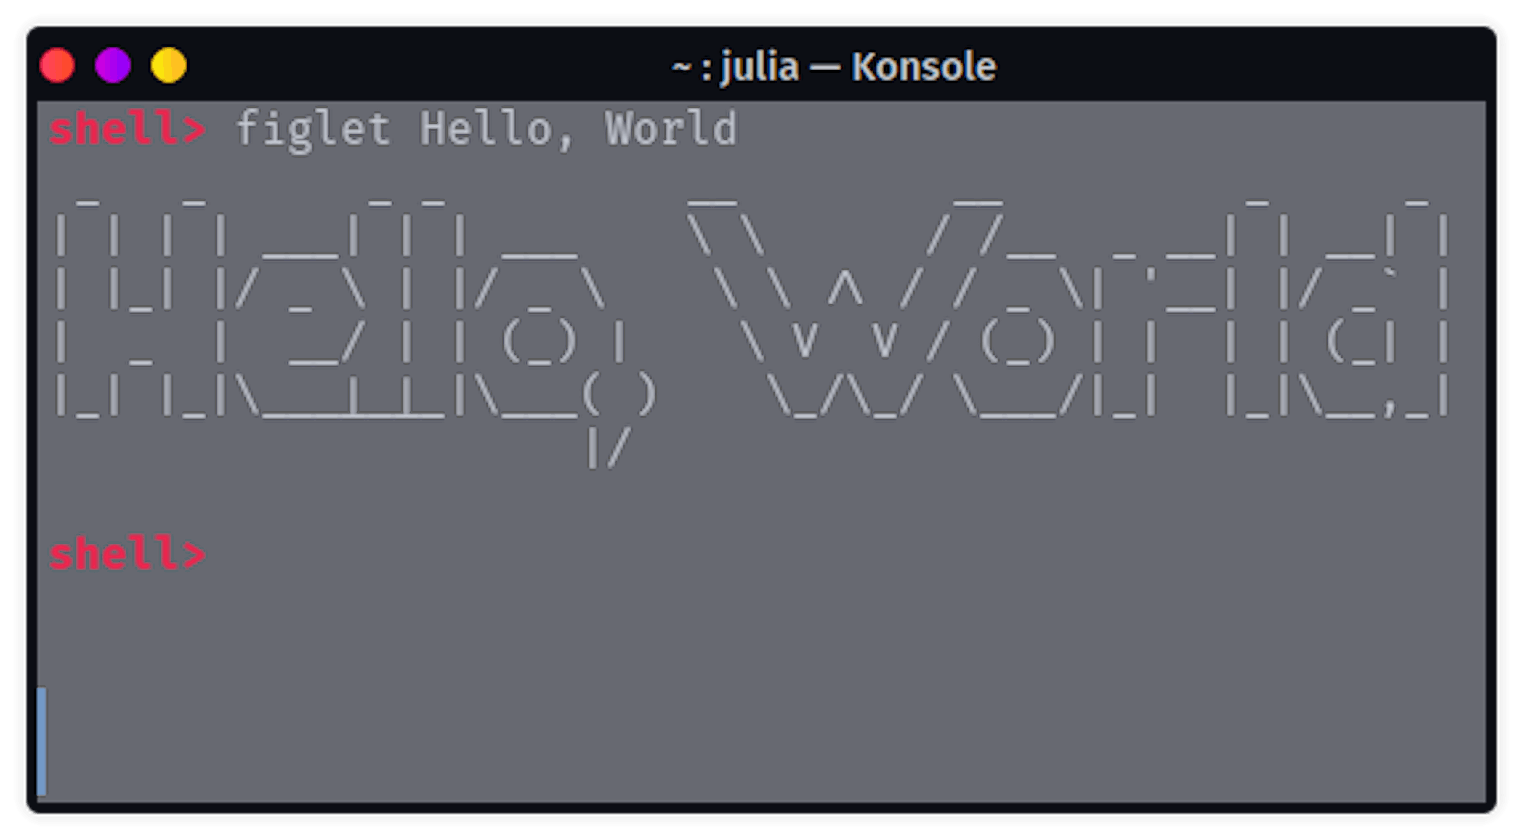 "Hello, World" program in Julia